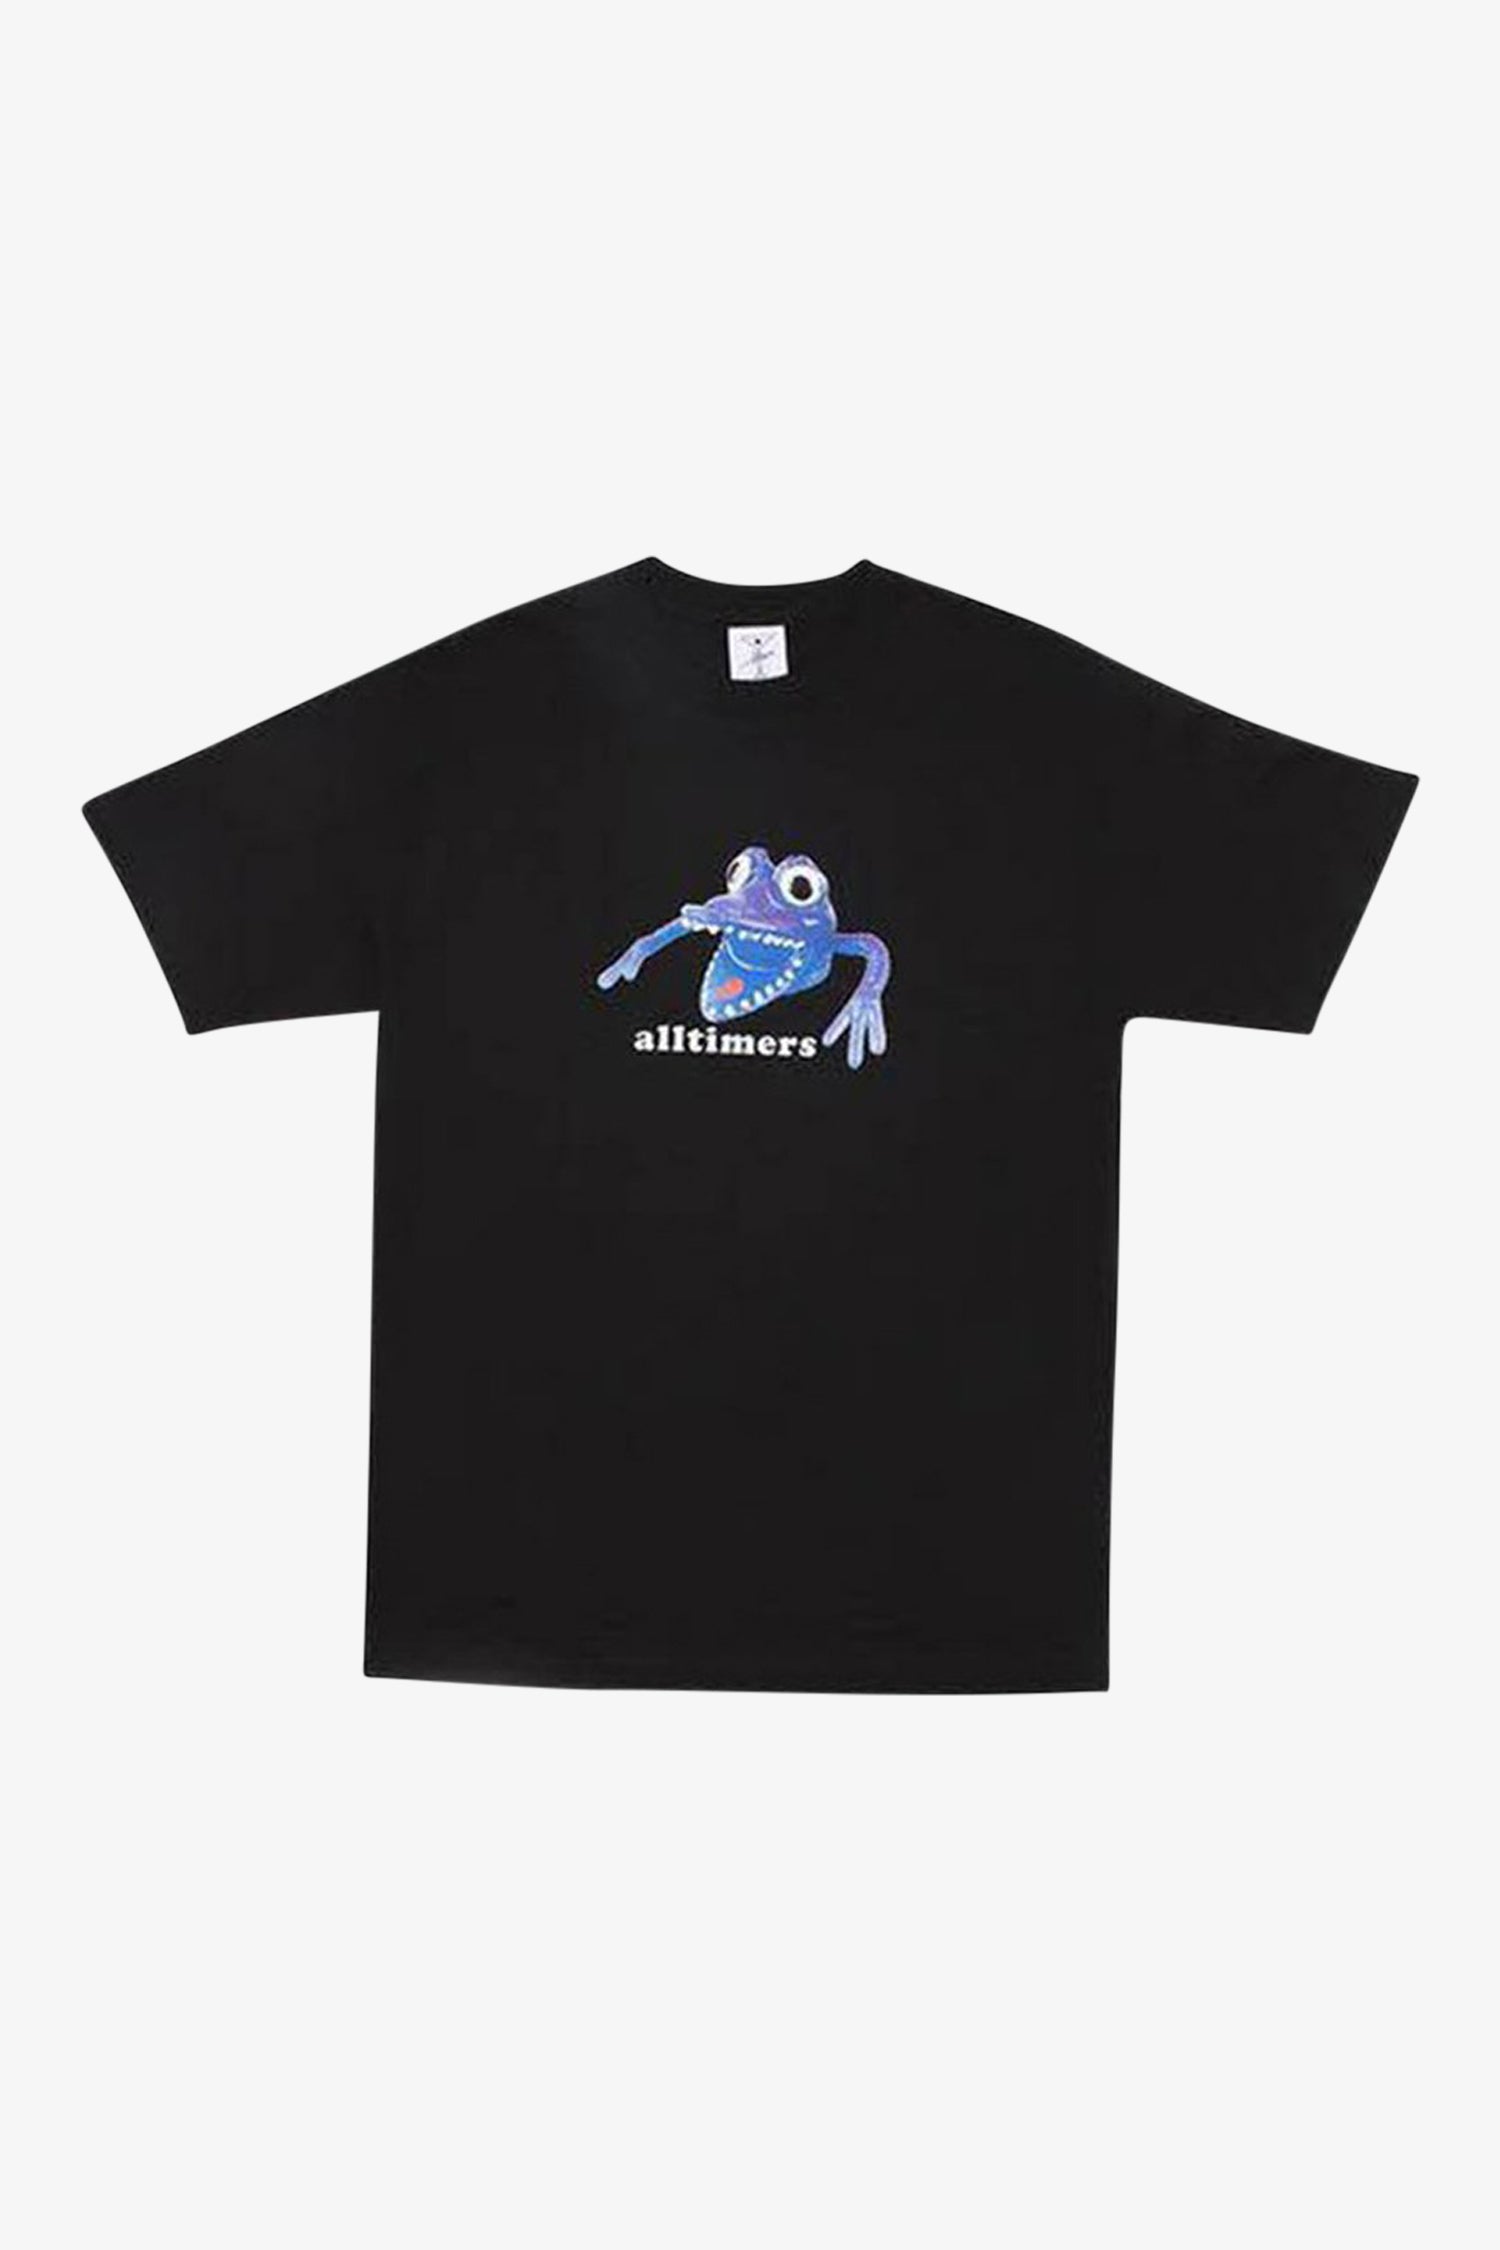 Selectshop FRAME - ALLTIMERS Monster Tee T-Shirt Dubai